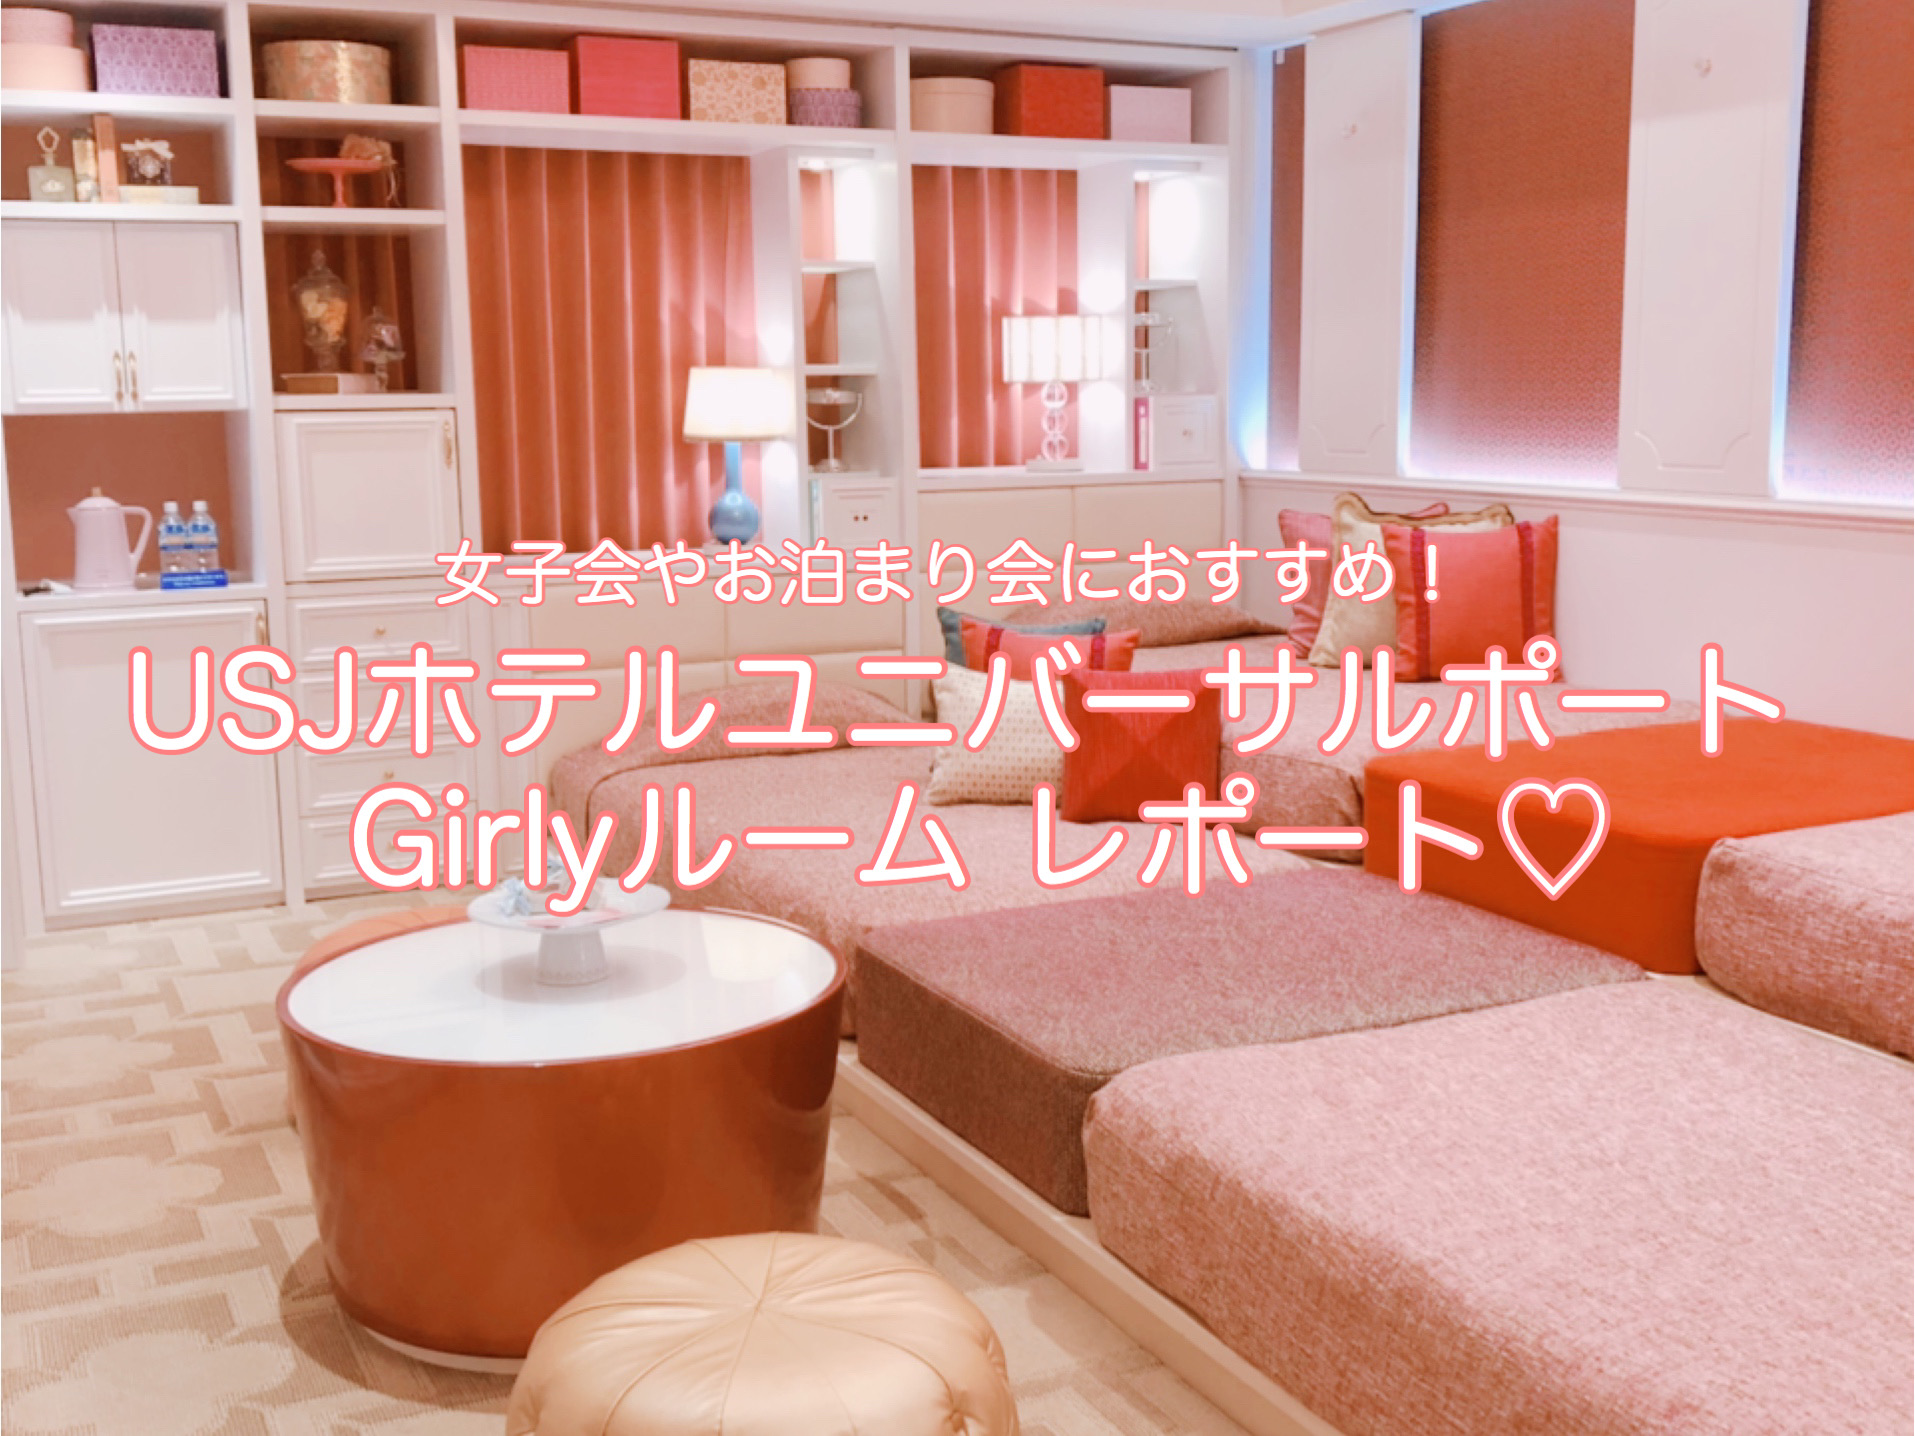 Usjホテルユニバーサルポートのコンセプトルーム Girlyルーム が可愛